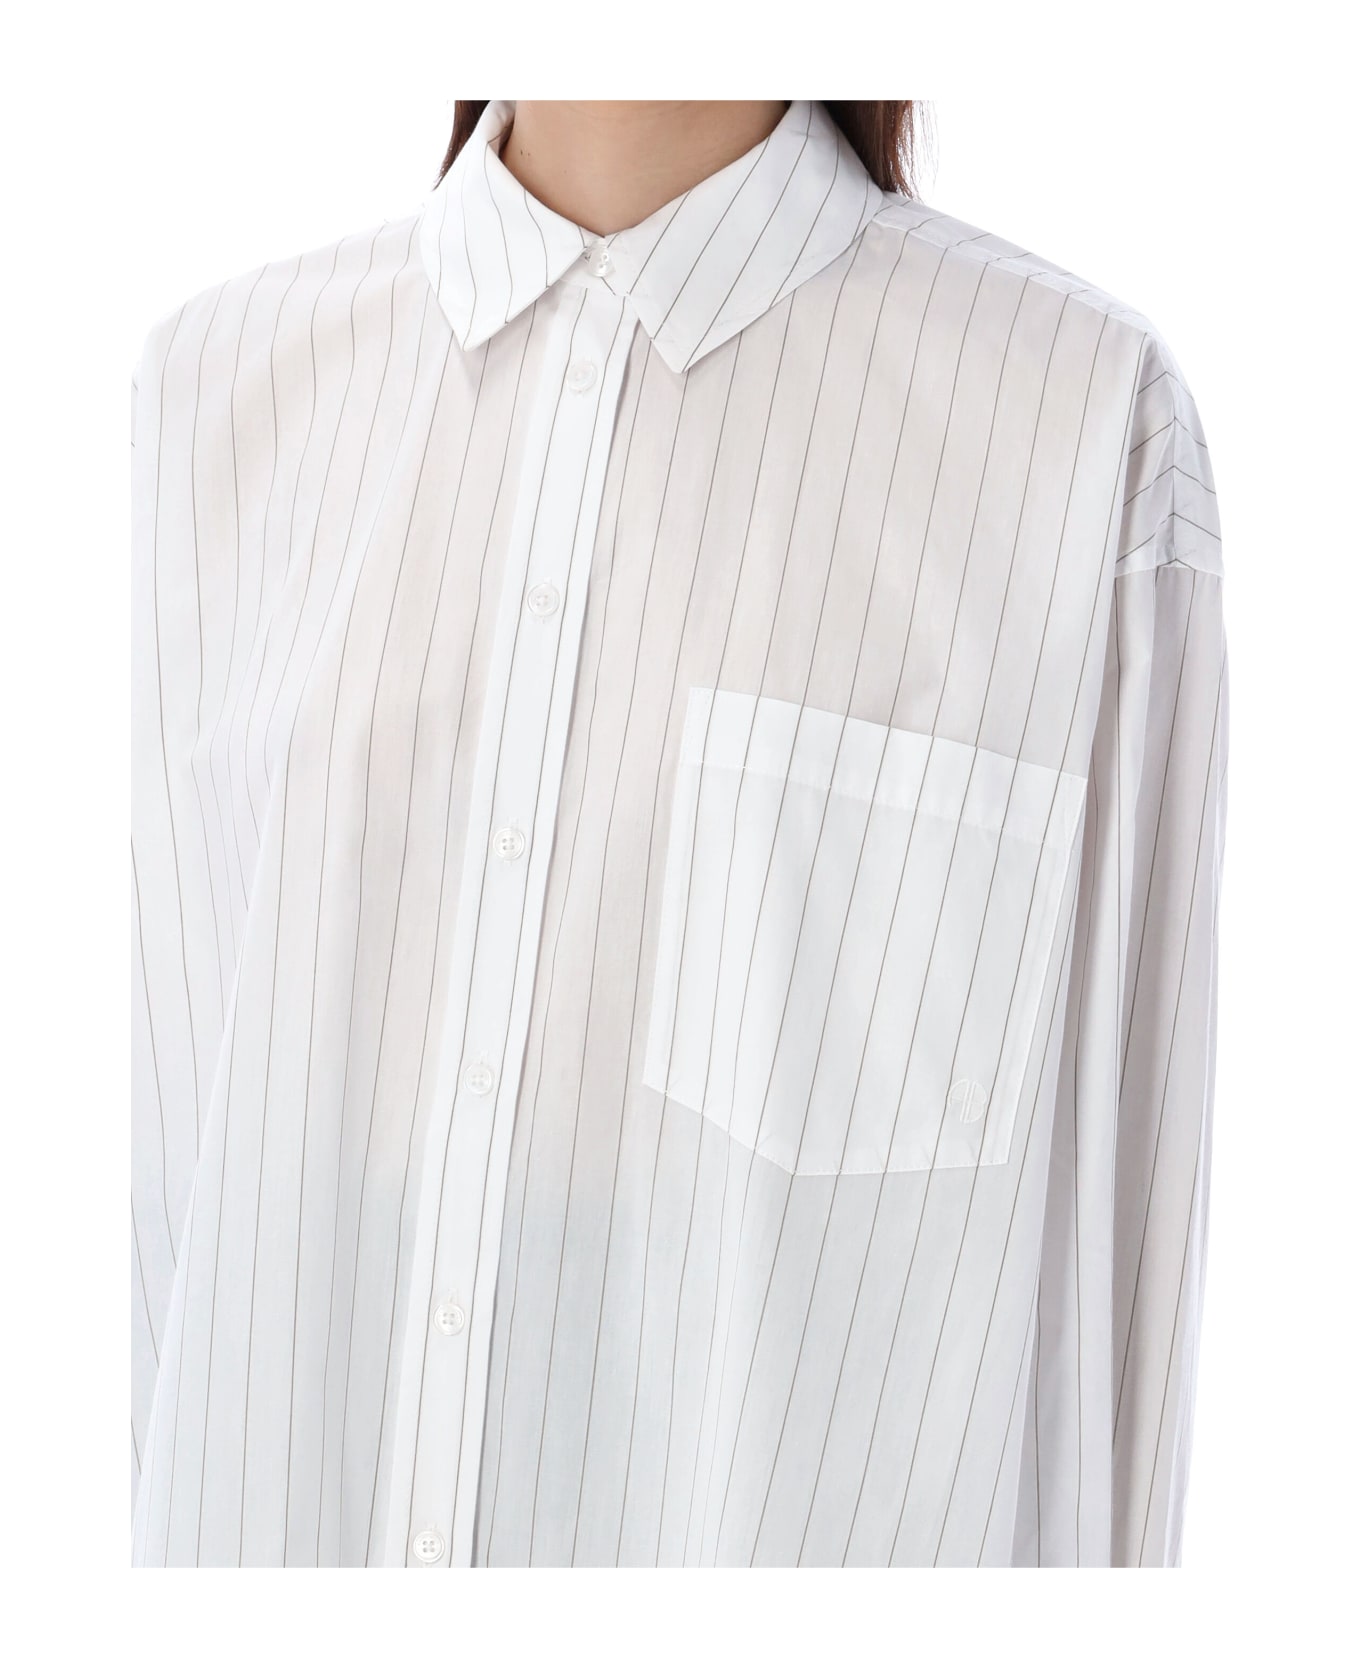 Anine Bing Chrissy Shirt - MULTI WHITE ブラウス